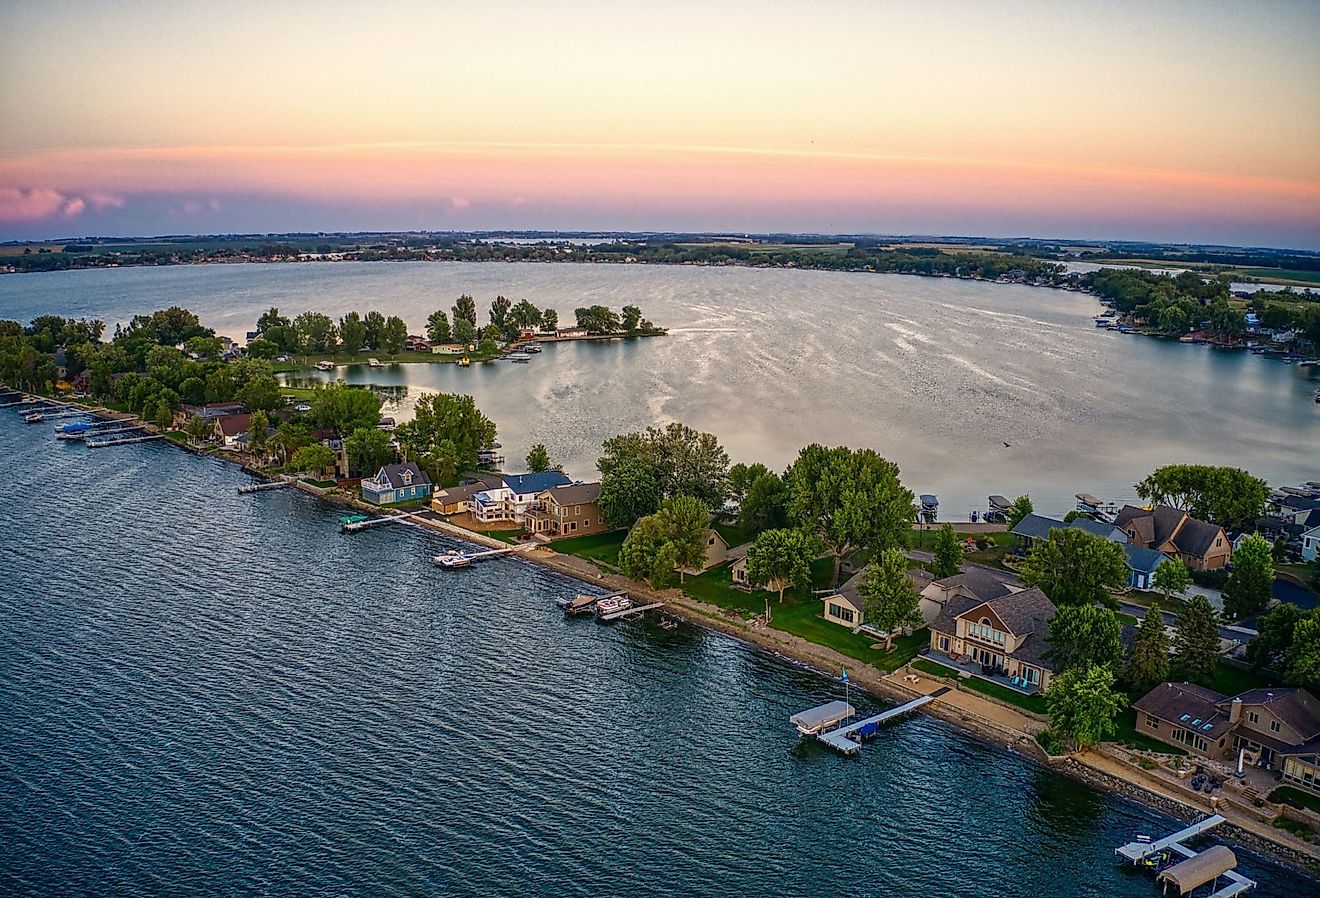 Aerial view of Lake Madison, South Dakota. Image credit Jacob Boomsma via Shutterstock.